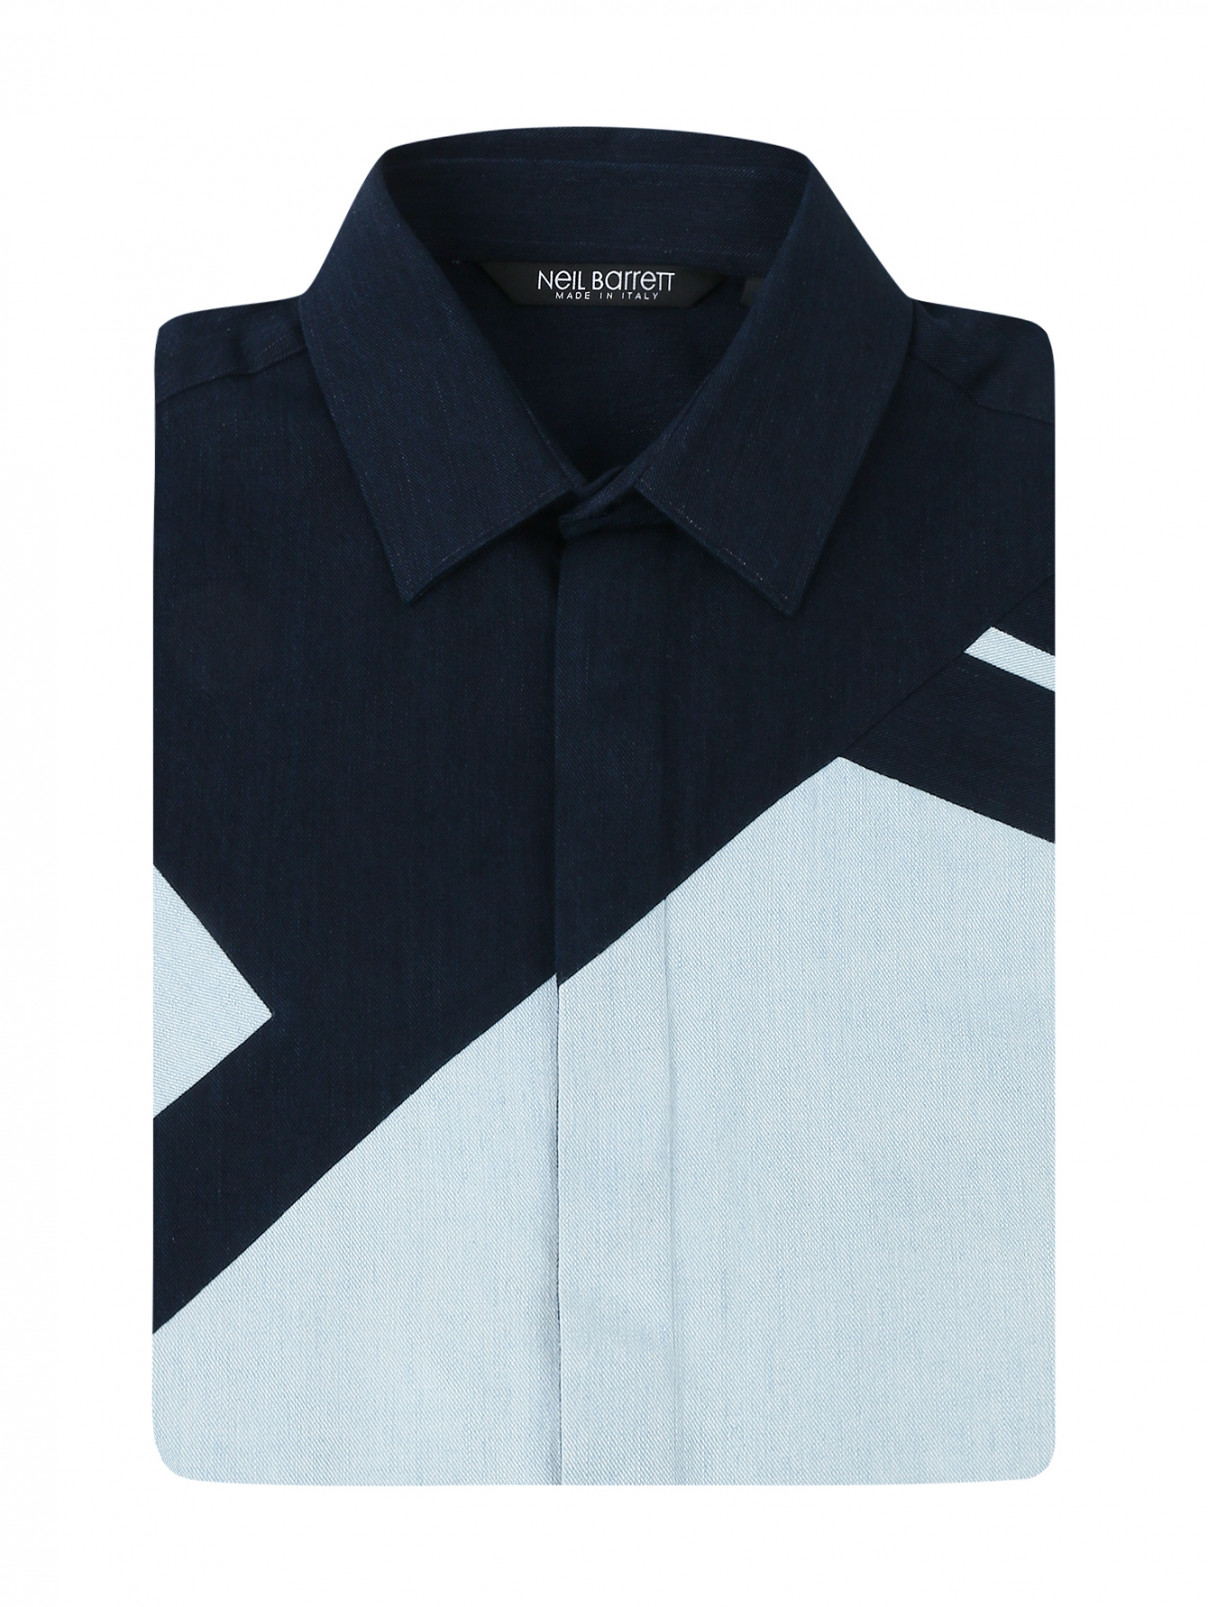 Рубашка из хлопка с коротким рукавом NEIL BARRETT  –  Общий вид  – Цвет:  Синий